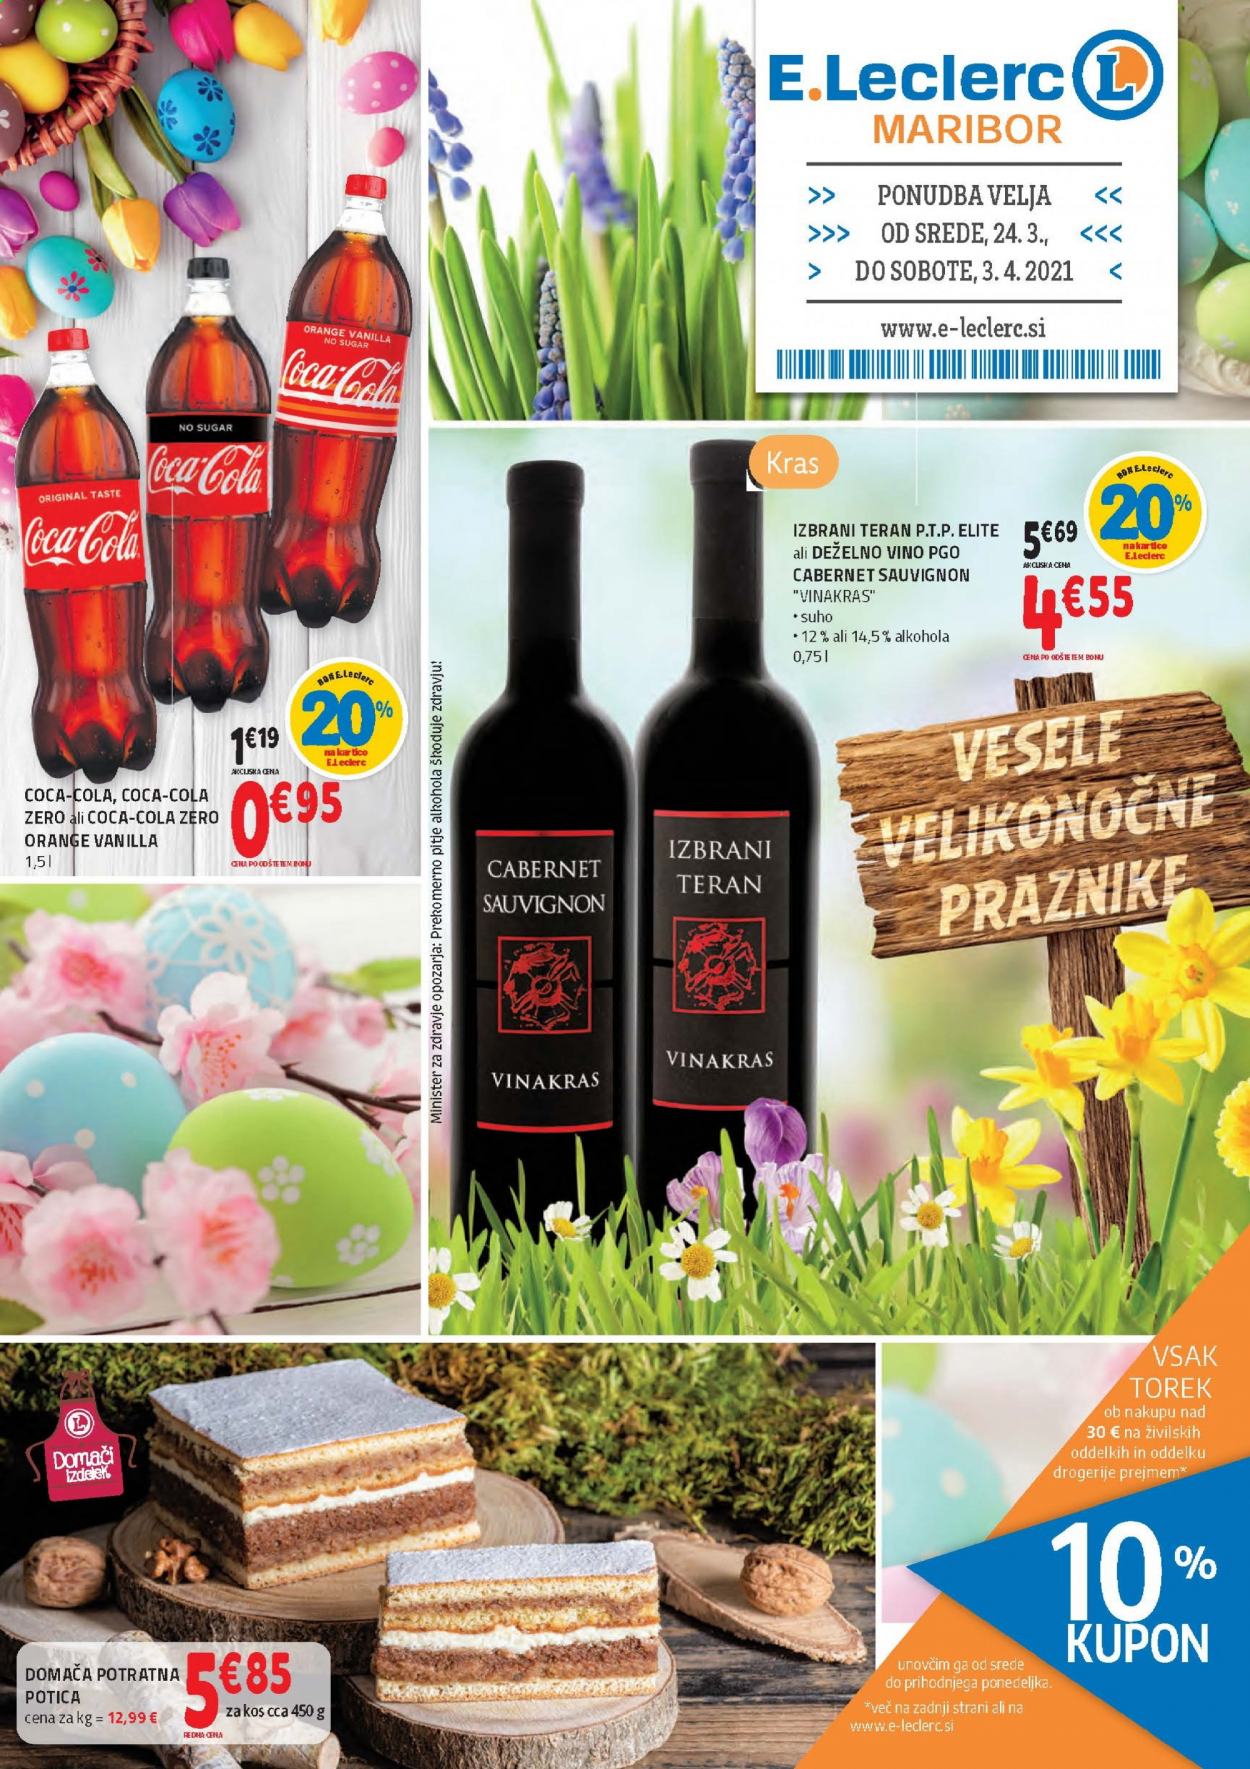 thumbnail - E.Leclerc katalog - 24.3.2021 - 3.4.2021 - Ponudba izdelkov - Coca-Cola, Sola, vino, Cabernet Sauvignon. Stran 1.